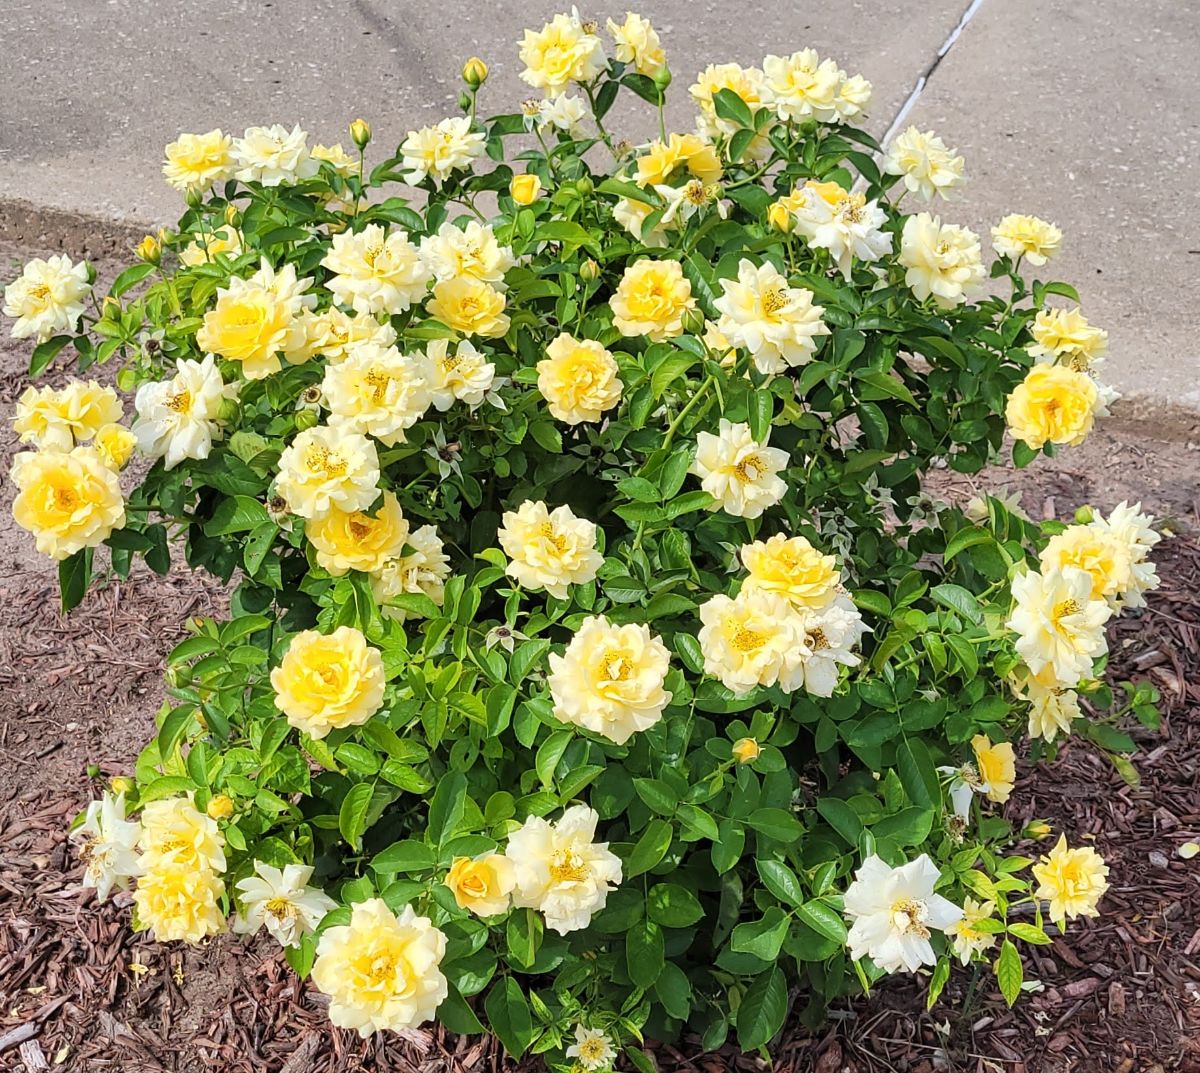 A yellow rose bush in full bloom